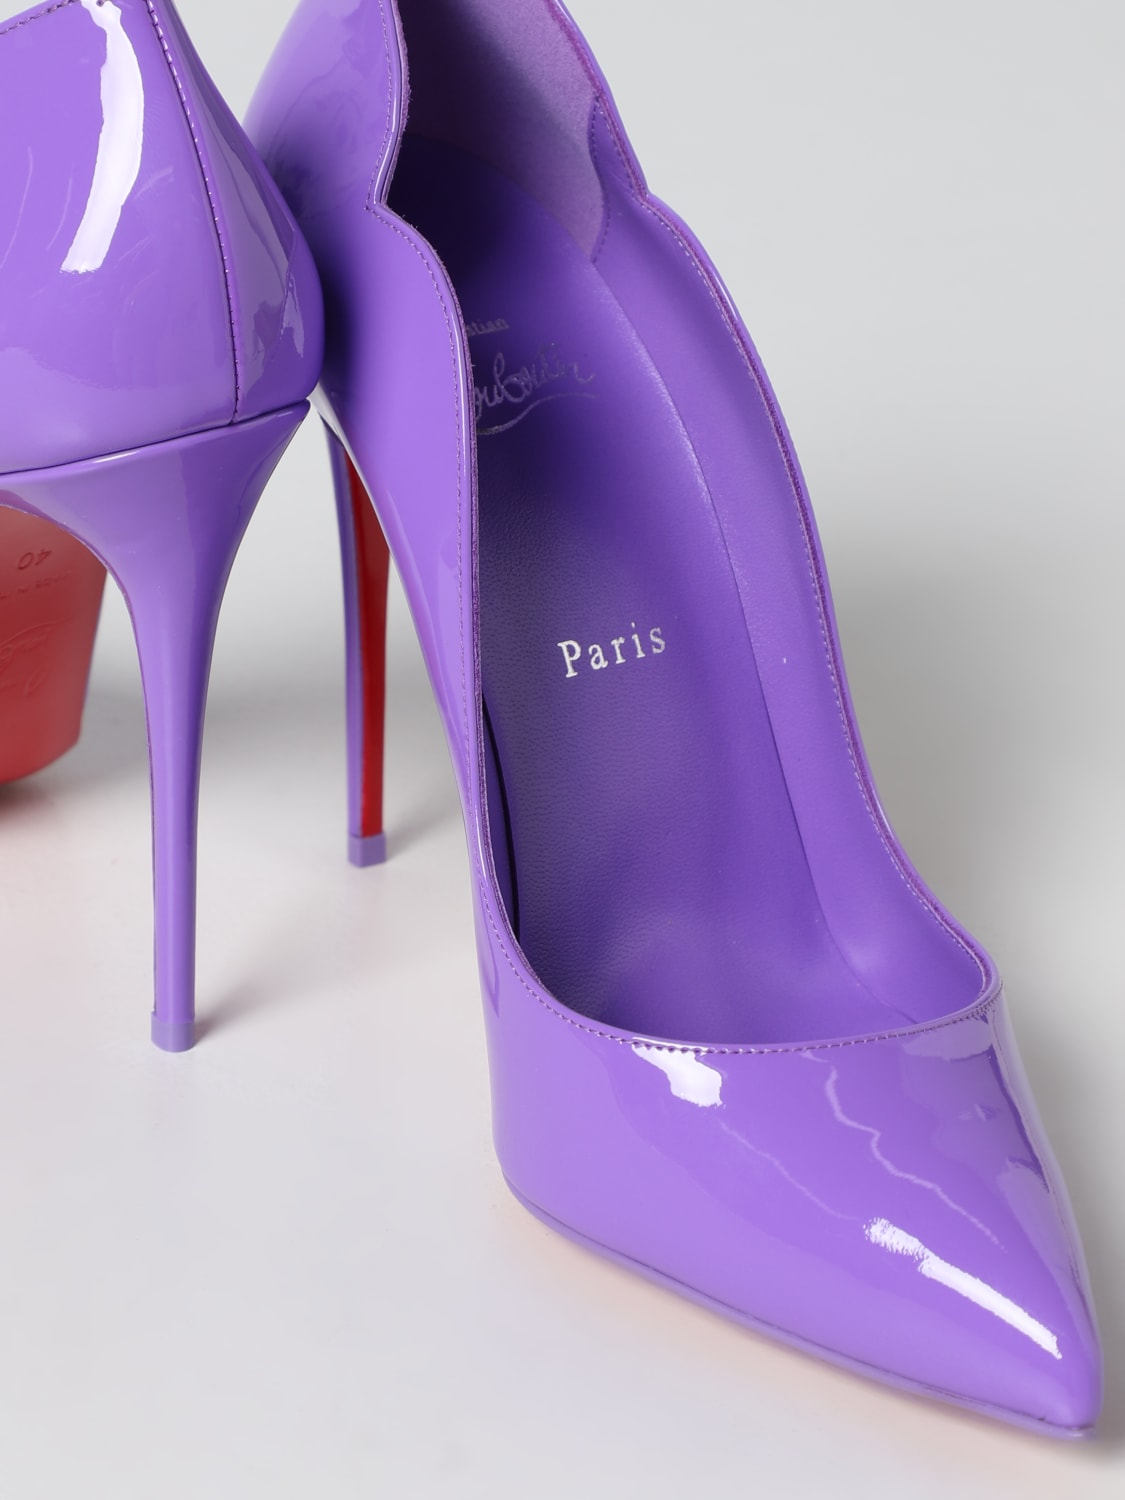 Christian Louboutin Women's Heels for sale